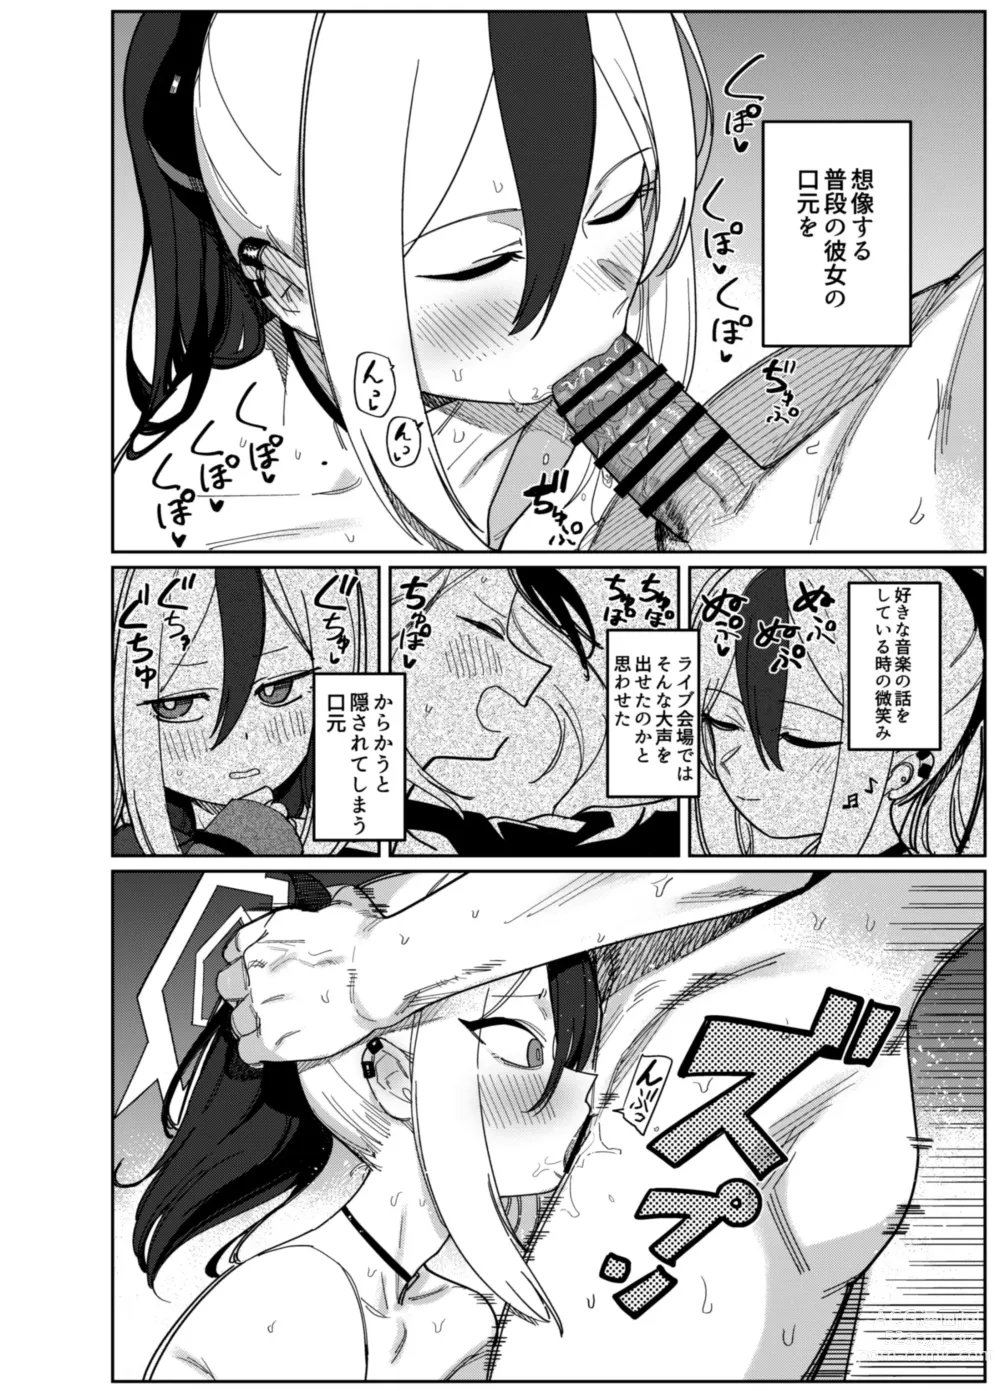 Page 12 of doujinshi Onikata Kayoko wa Konna Koto Shinai. Part. 2 - Onikata Kayoko wont do this type of stuff.